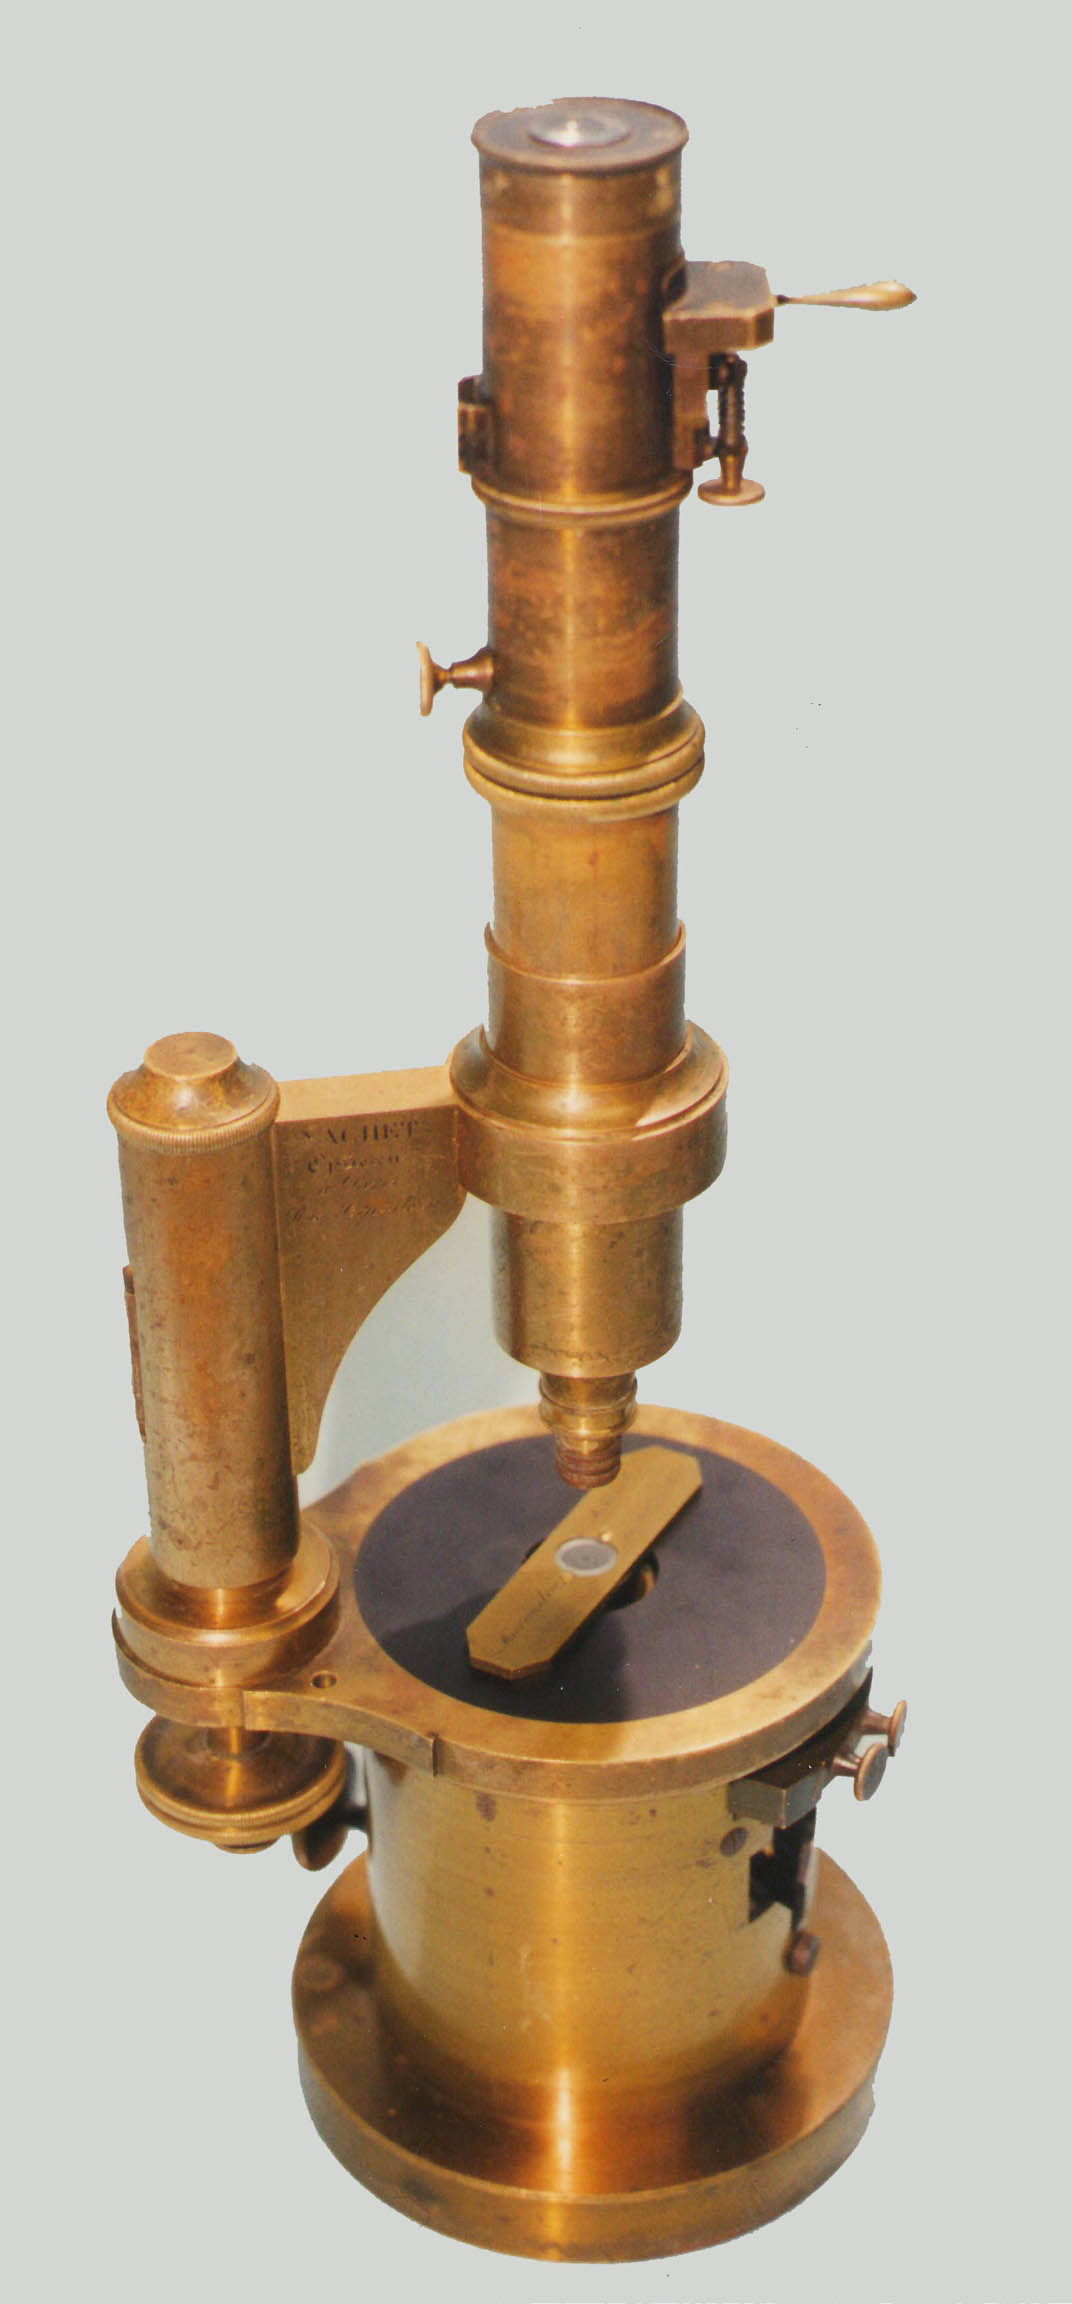 52c. Drum microscope. C. Nachet. c.1850. - Colección de Microscopios